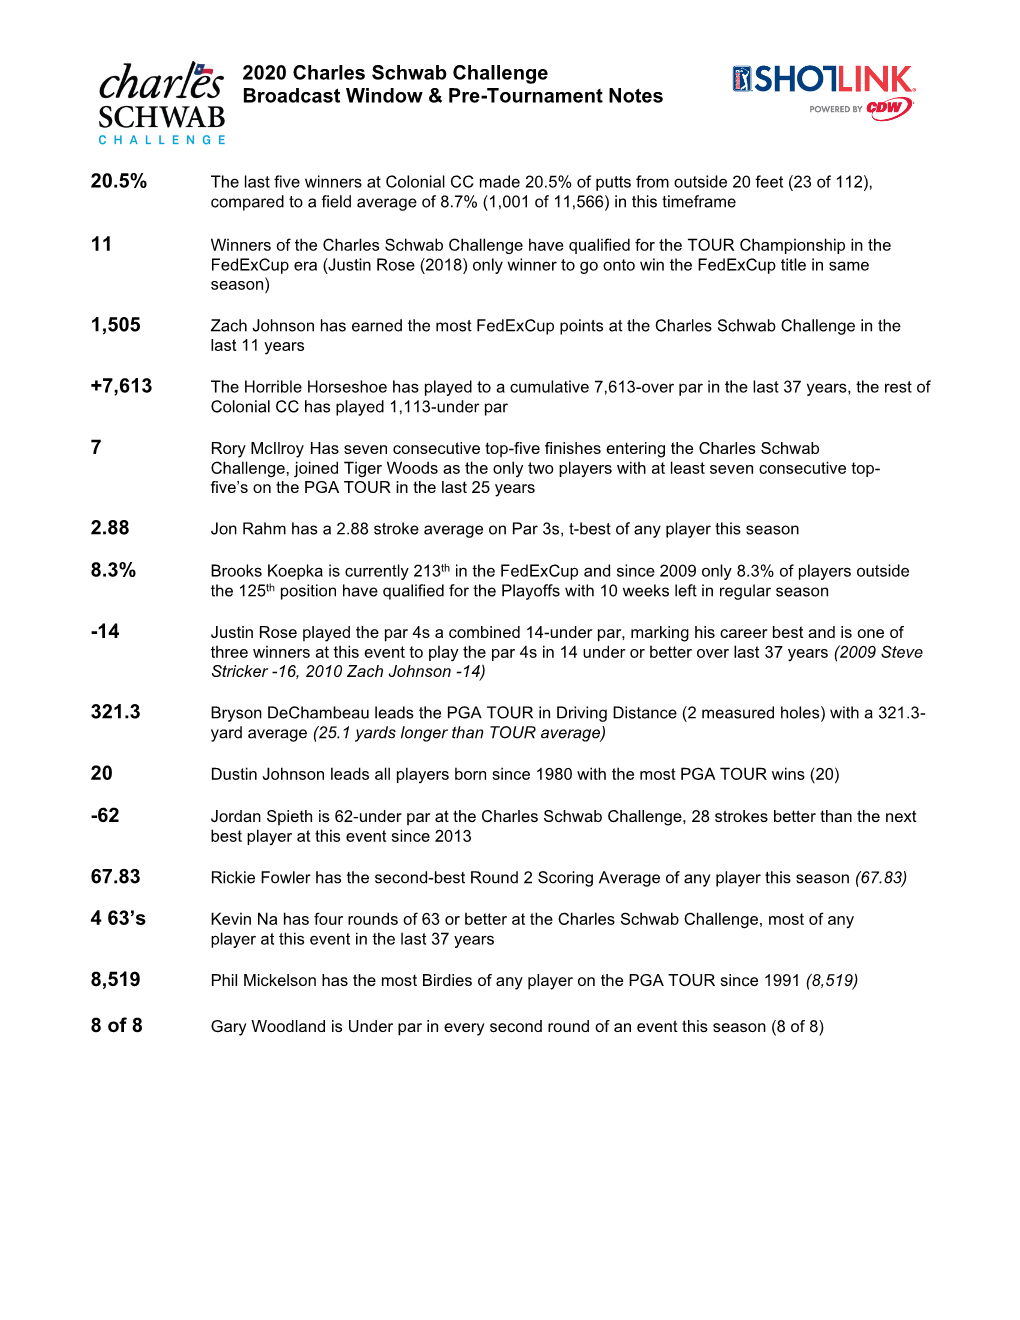 2020 Charles Schwab Challenge Broadcast Window & Pre-Tournament Notes 20.5% 11 1505 +7613 7 2.88 8.3%